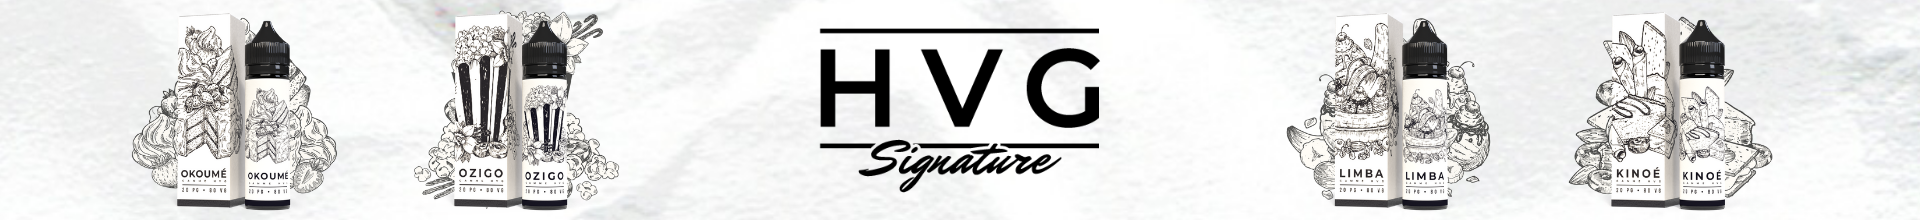 Gamme HVG Signature